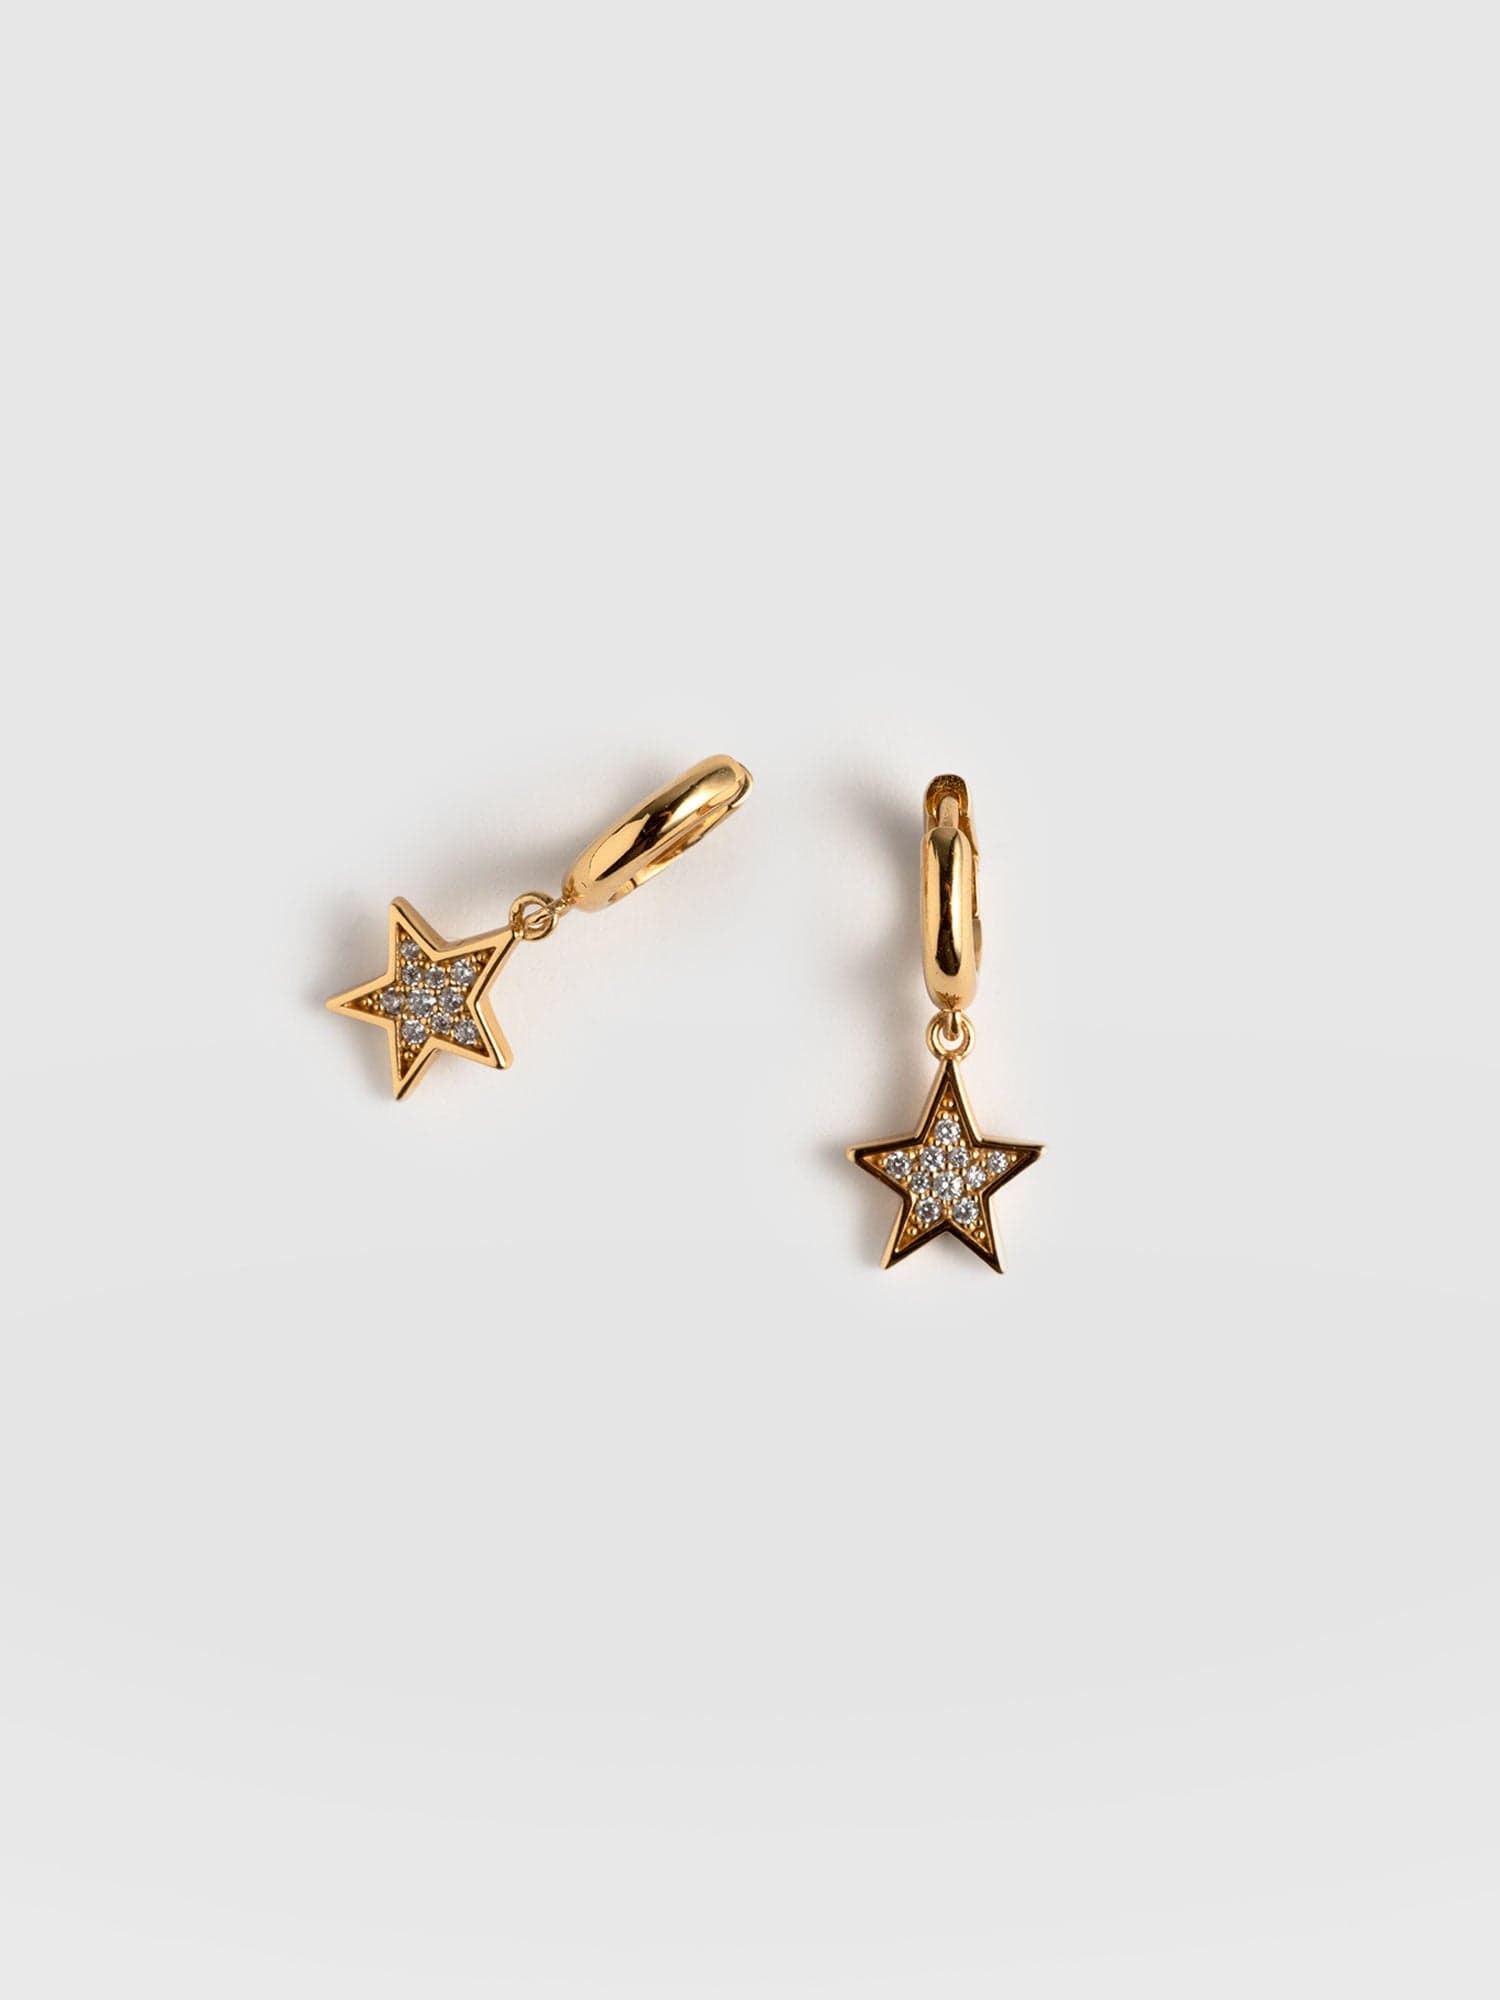 Buy 10K Real Gold Star Earrings Stud Women,wire Star Earrings,hoops Earrings  Gold,unique Dainty Earrings,lever Back Earring,girls Jewelry Gift Online in  India - Etsy